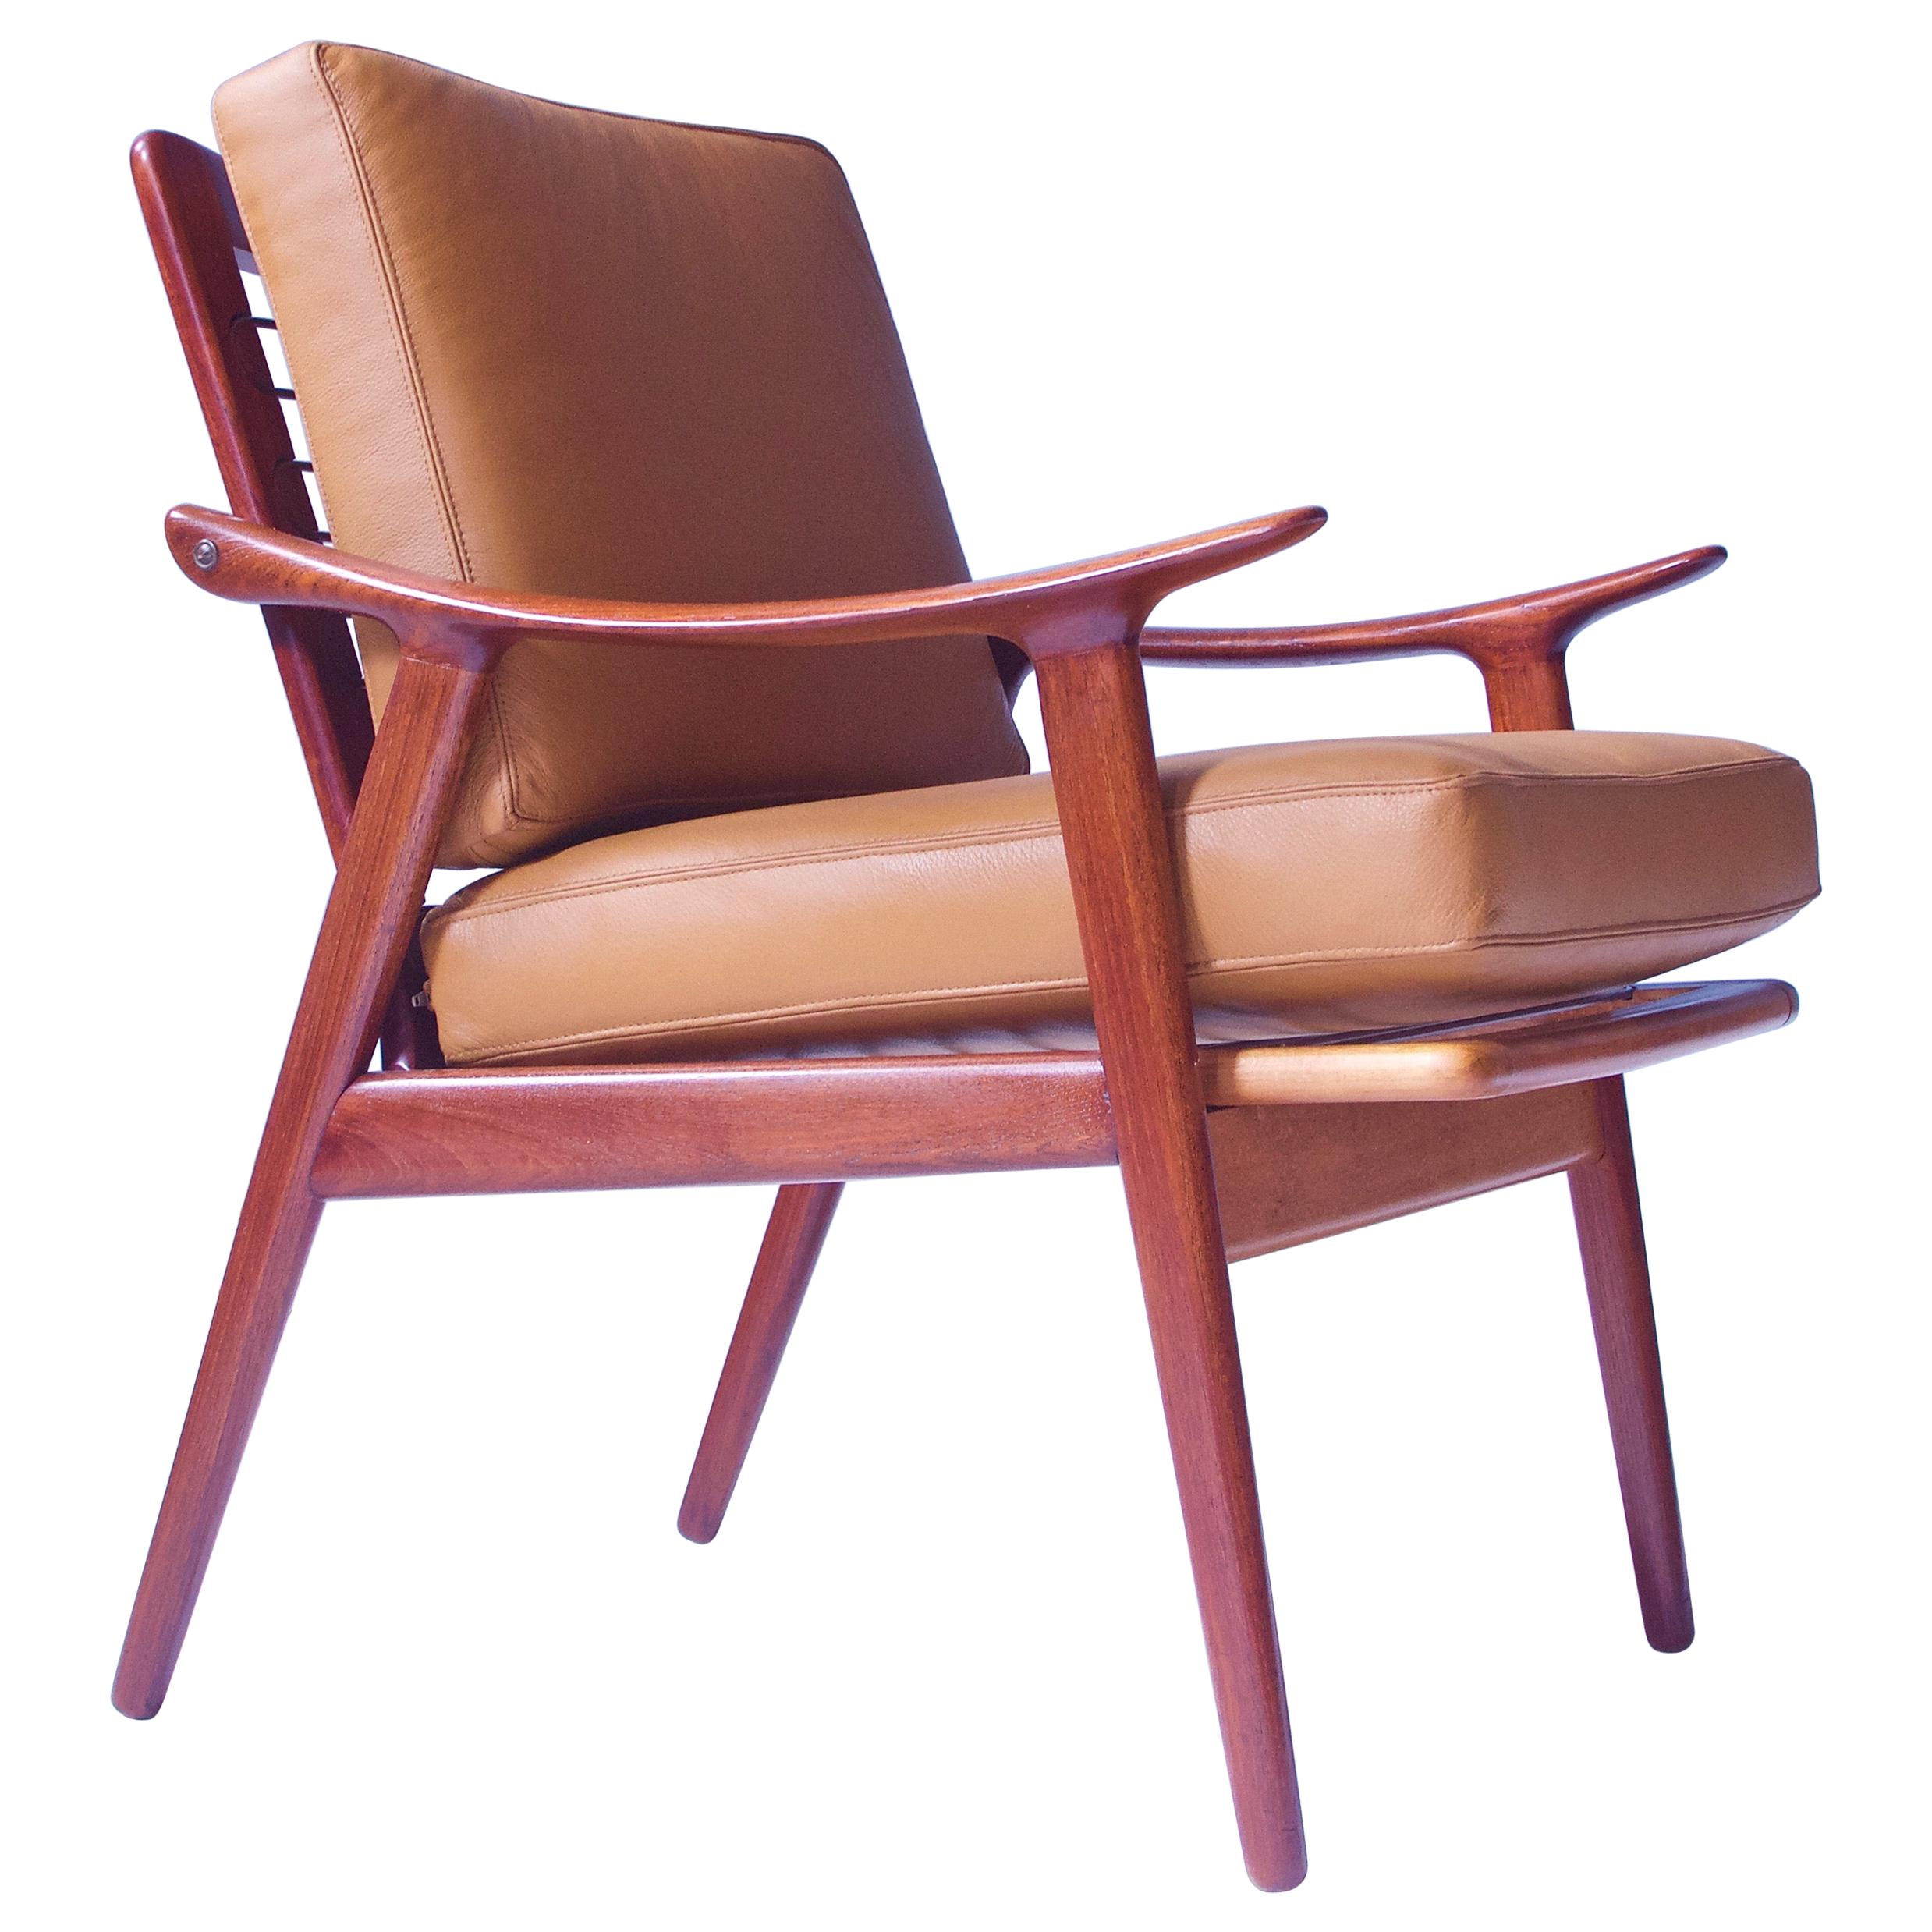 Vintage Fredrik A. Kayser Teak, Leather & Brass Easy Chair #563, Norway, 1950s